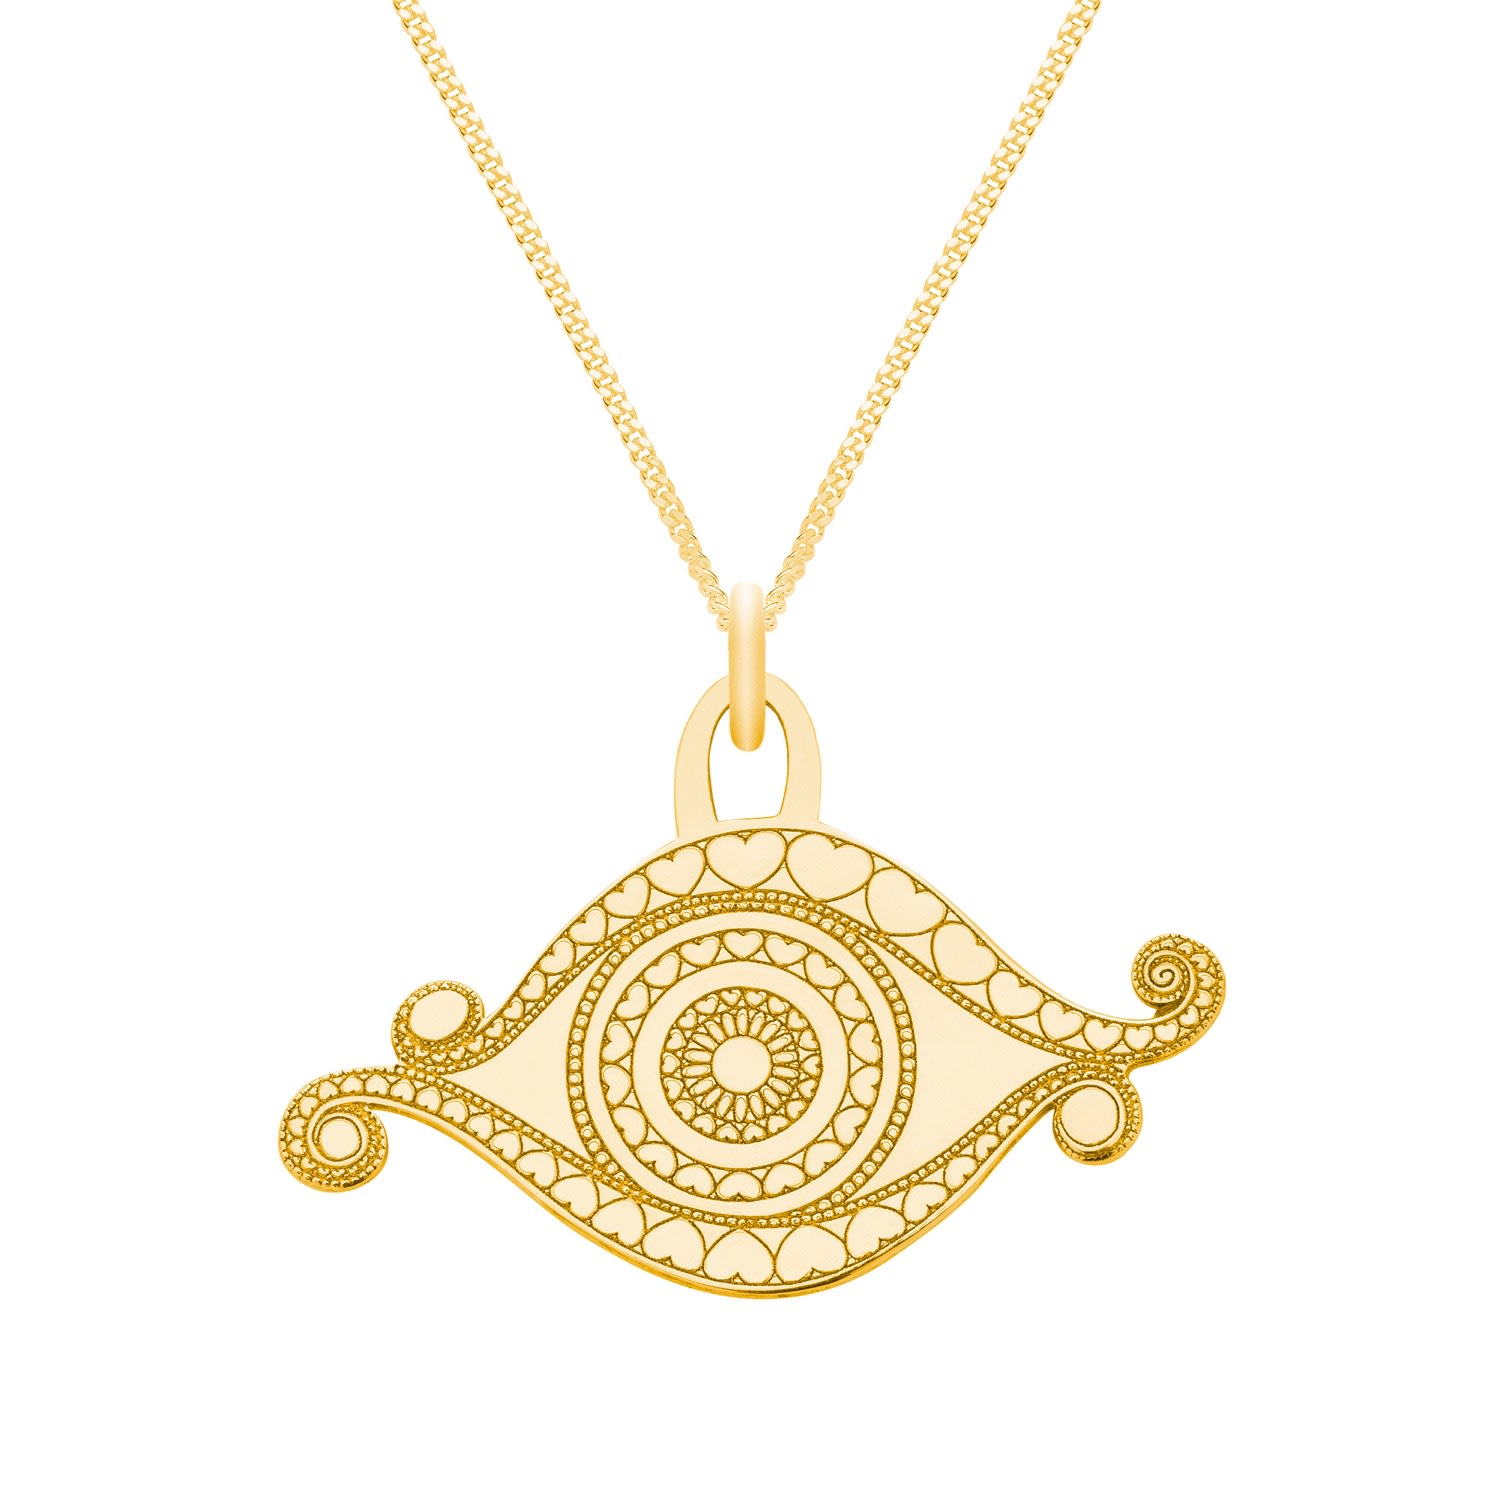 Cartergore Women's Small Gold Evil Eye Pendant Necklace